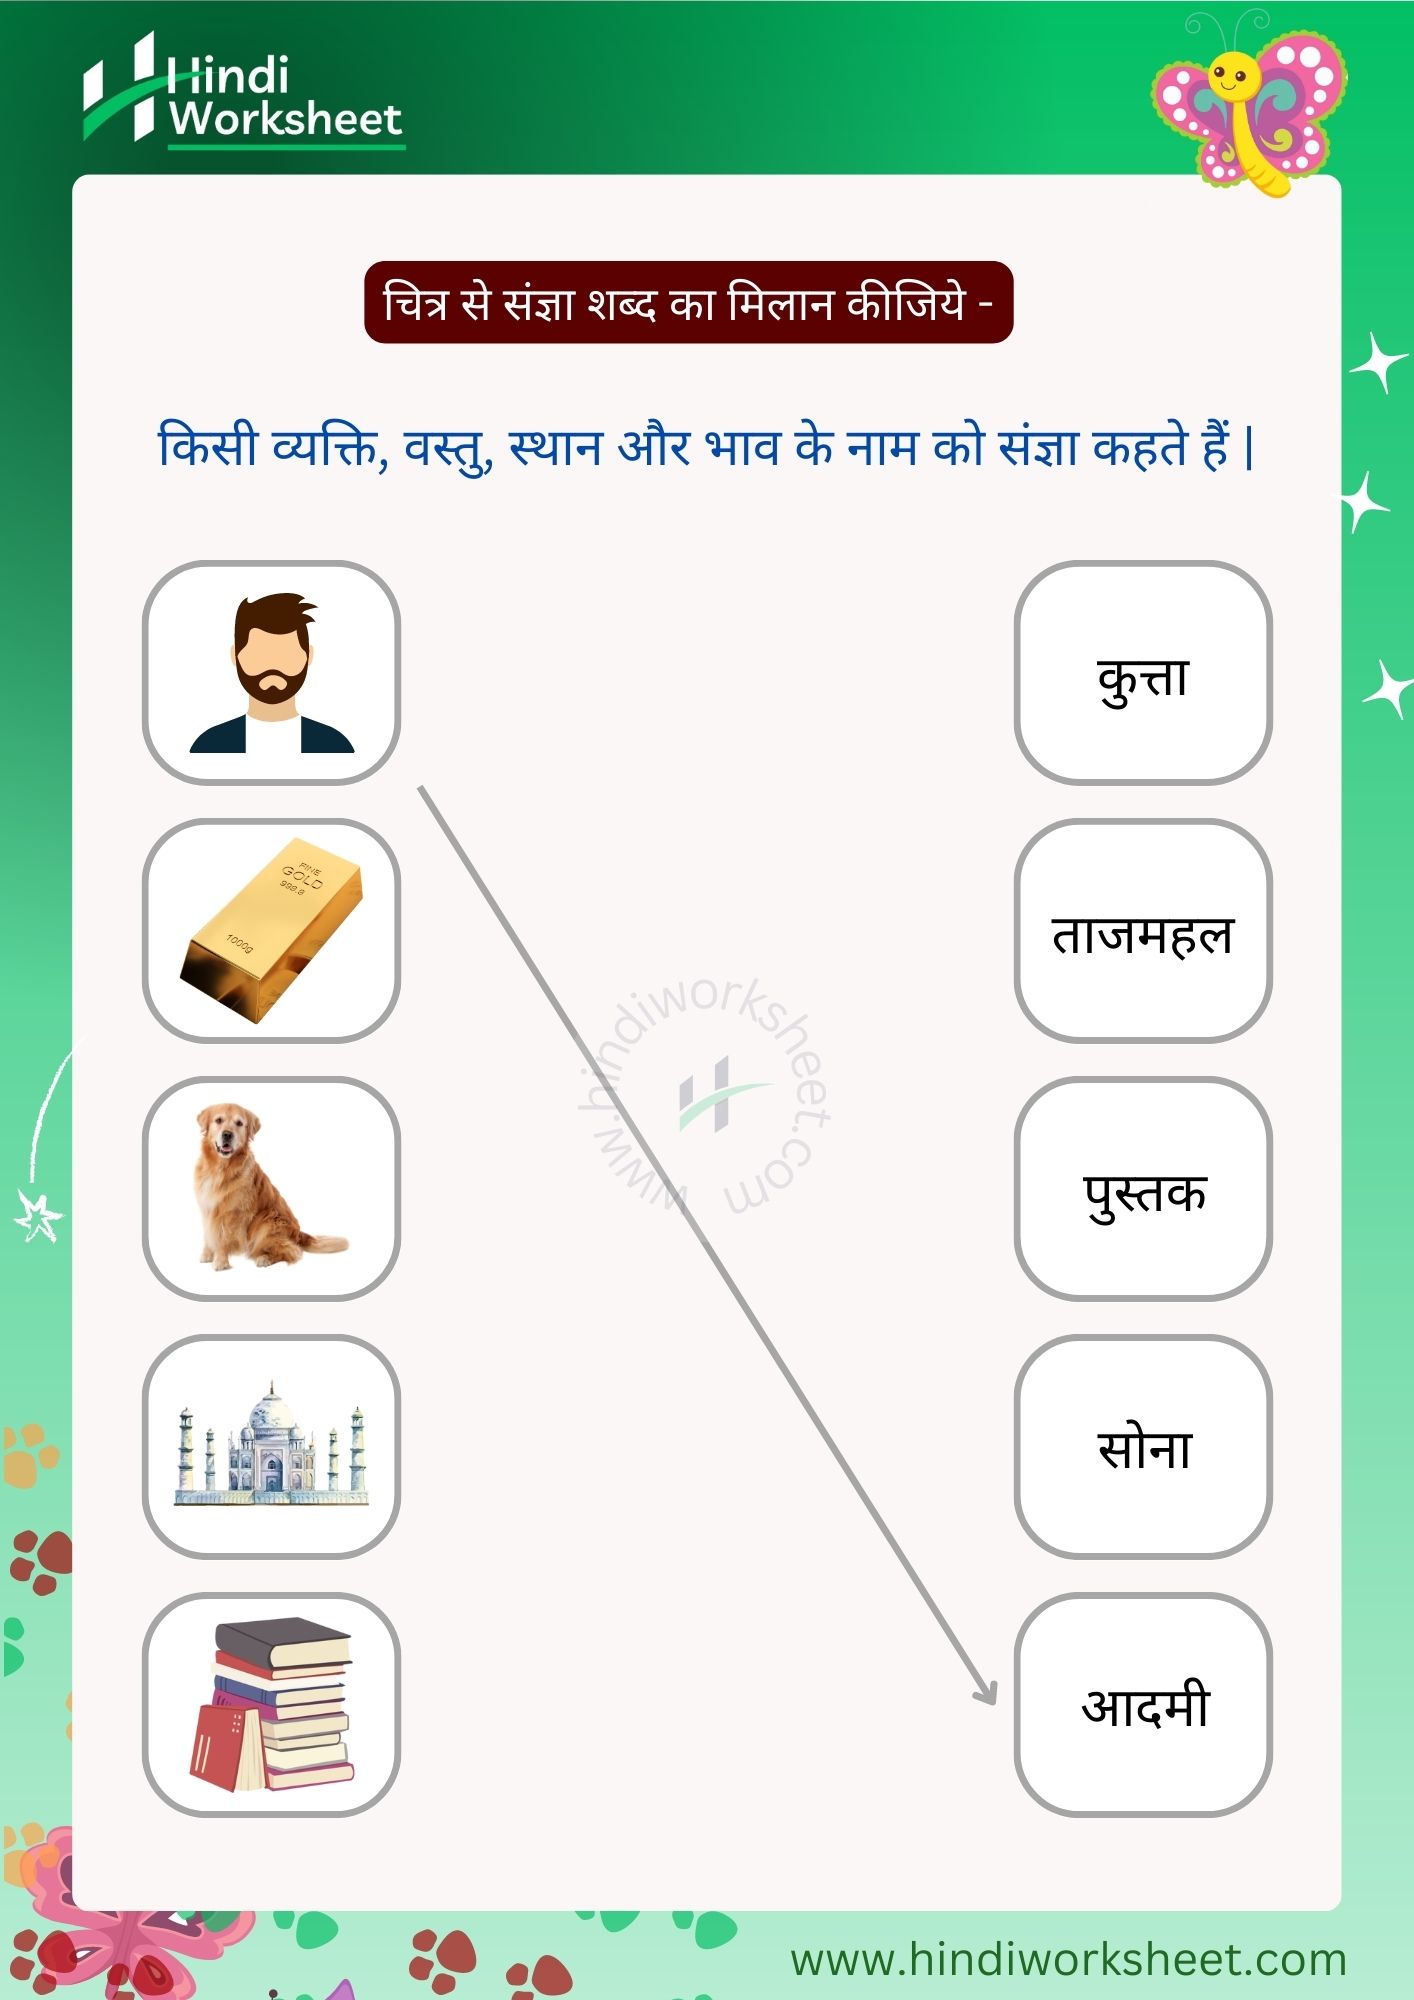 Hindi Worksheet for UKG Students